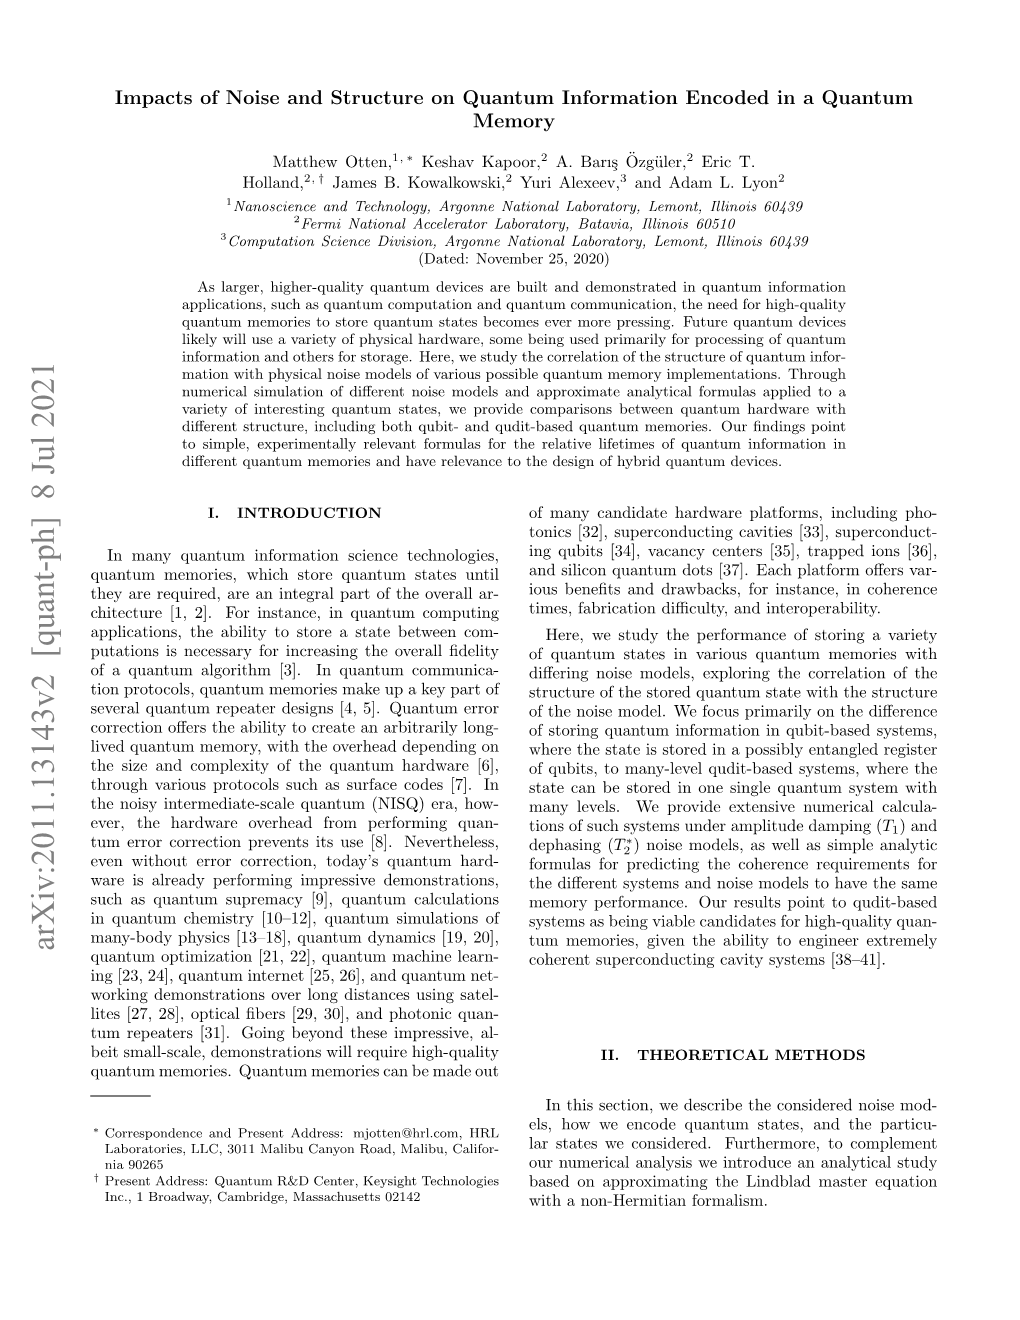 Arxiv:2011.13143V2 [Quant-Ph] 8 Jul 2021 Quantum Optimization [21, 22], Quantum Machine Learn- Coherent Superconducting Cavity Systems [38–41]